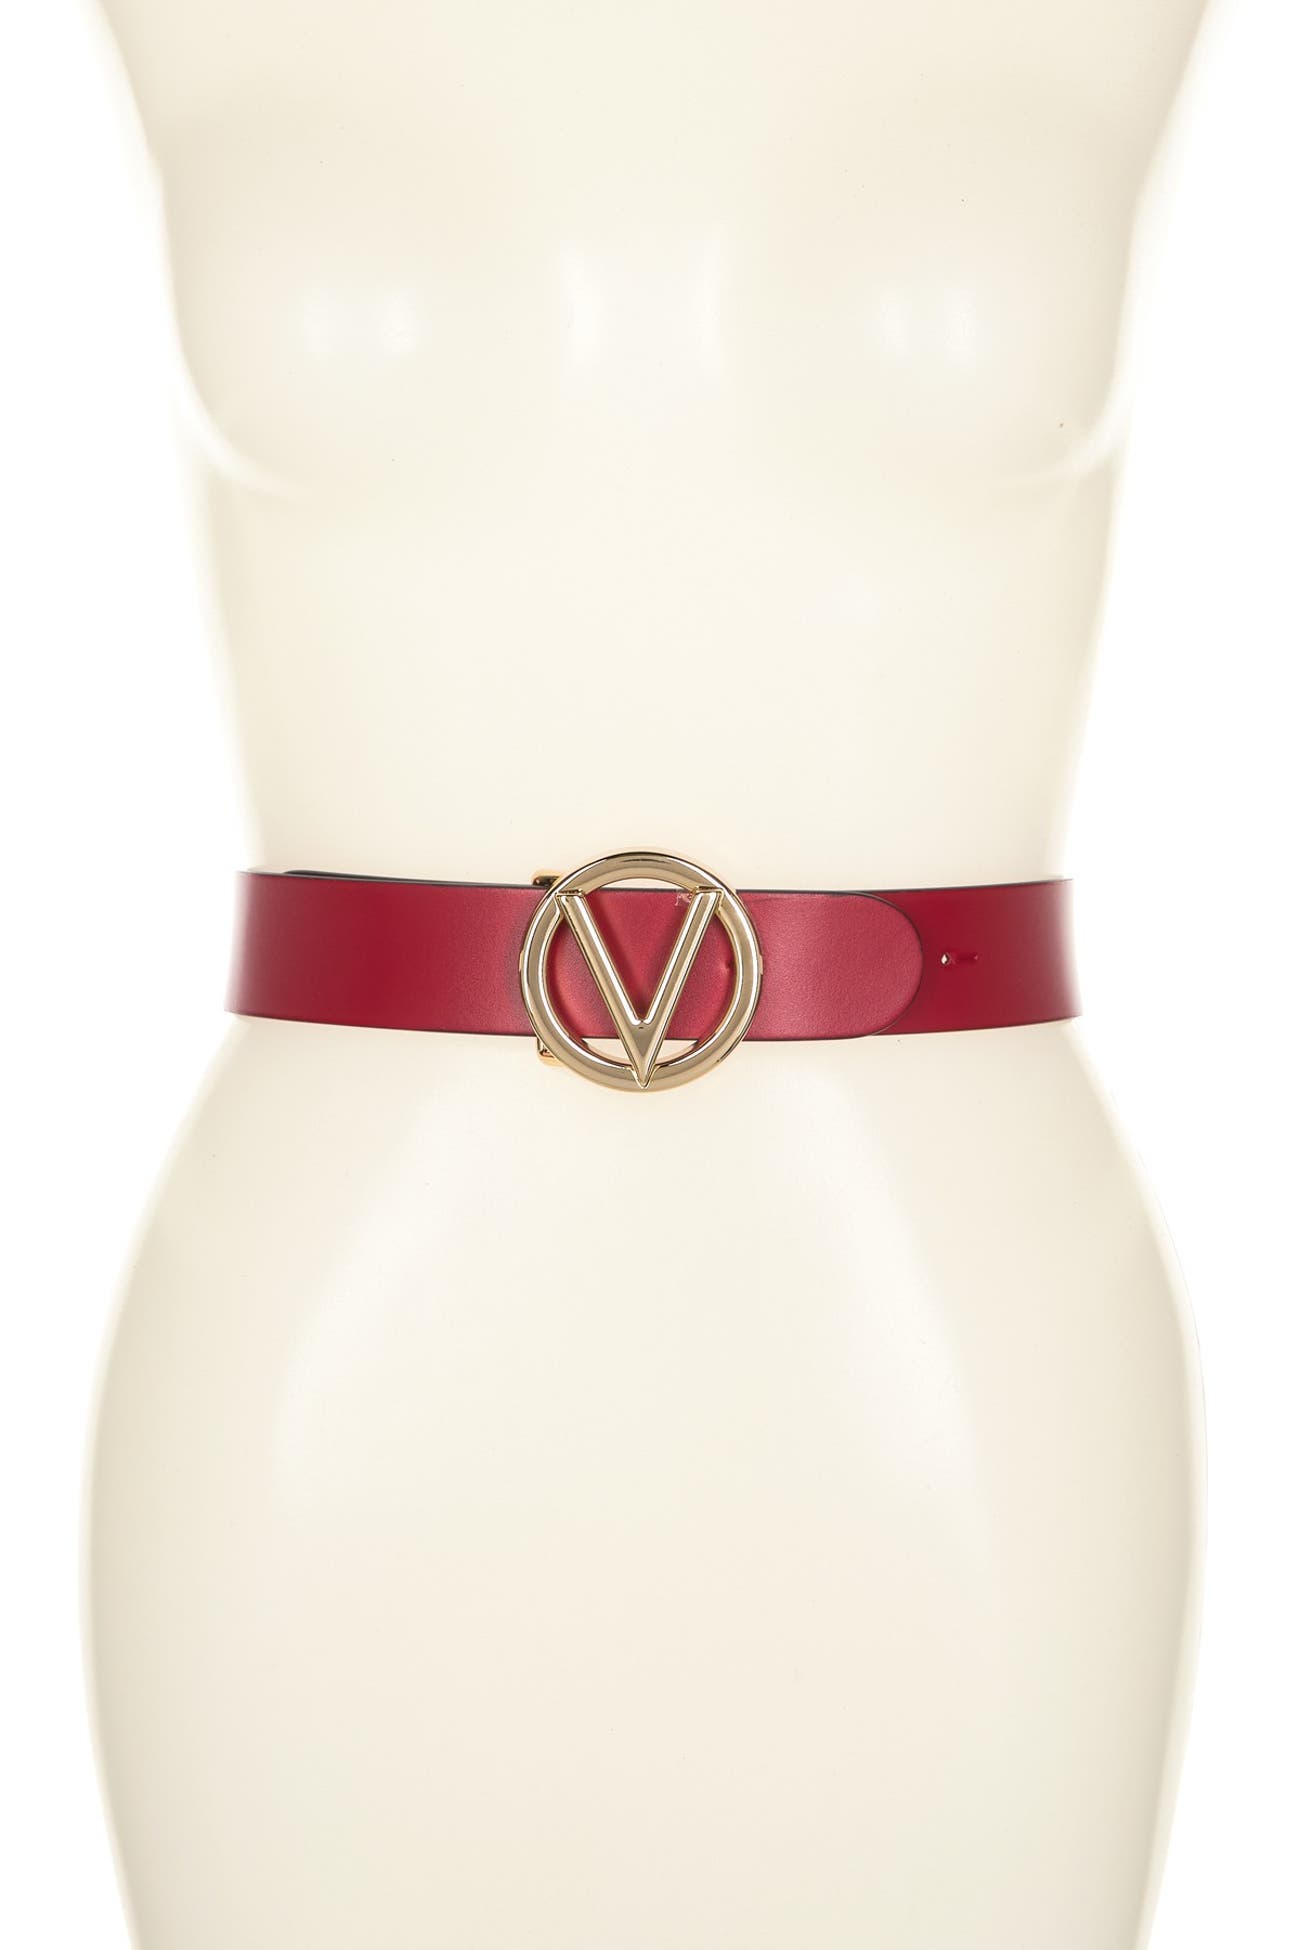 Valentino By Mario Valentino | Giusy Leather Belt - Small | Nordstrom Rack